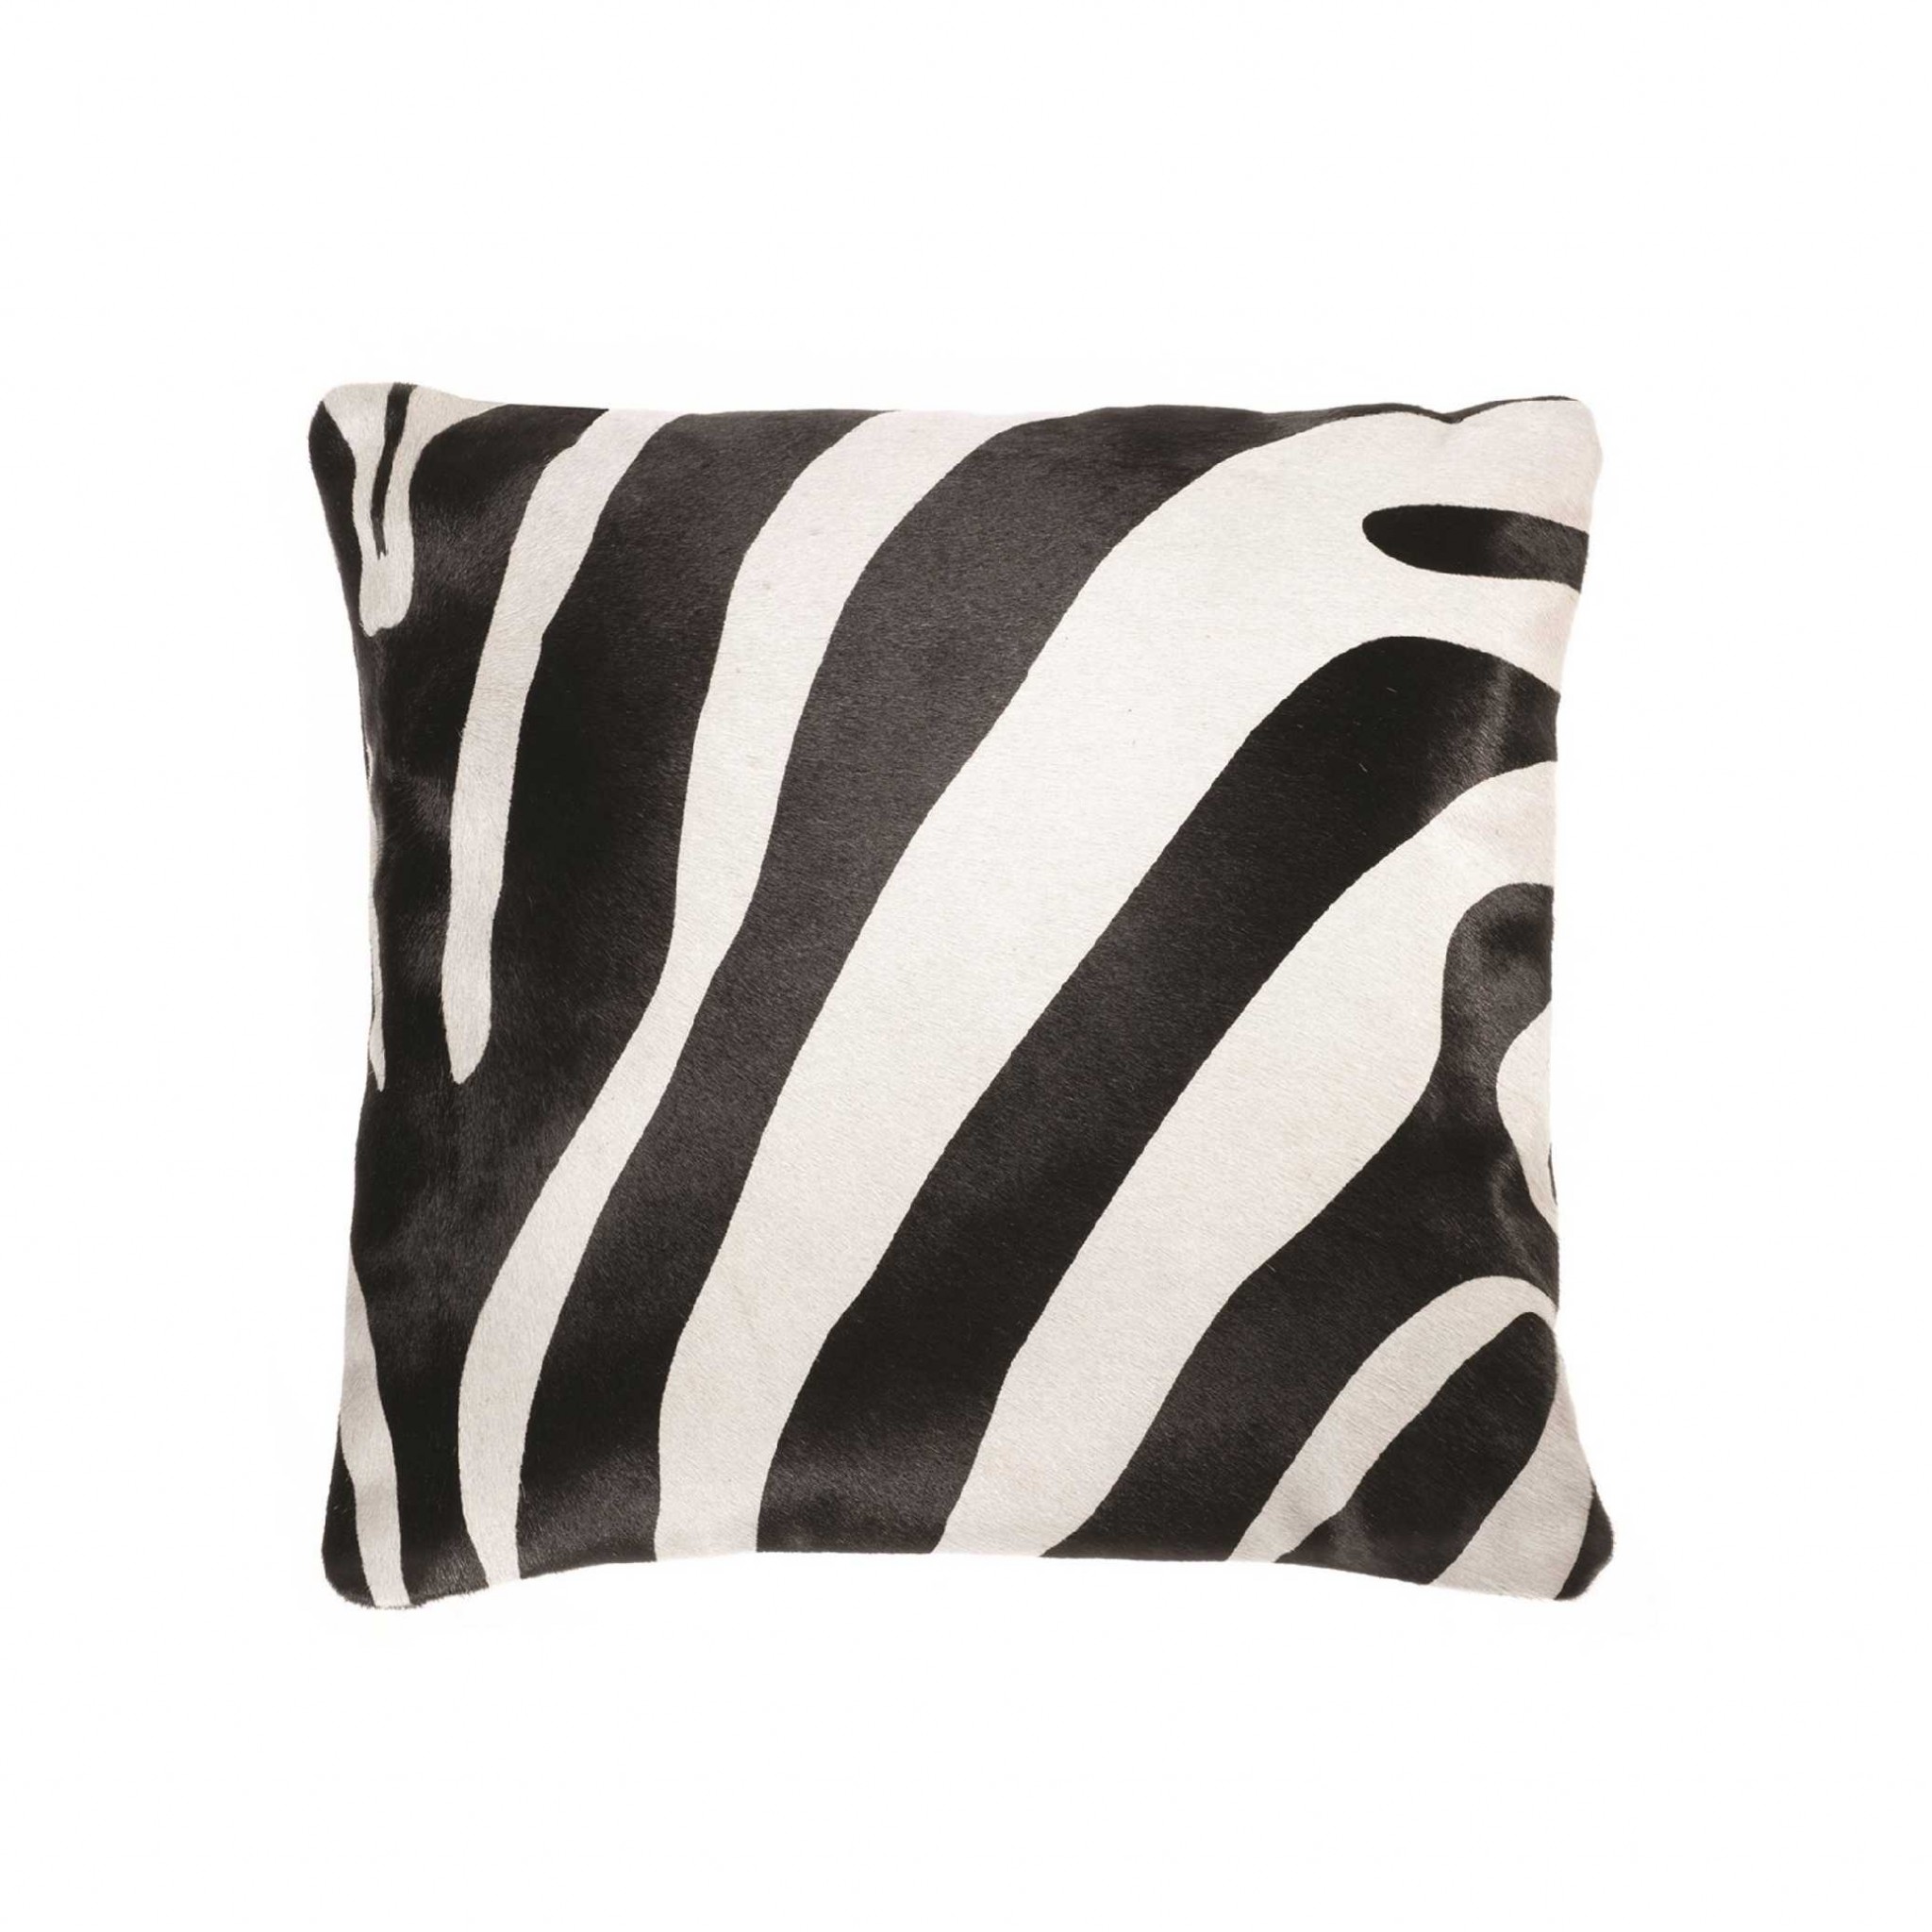 18" x 18" x 5" Zebra Black On Off White Cowhide - Pillow